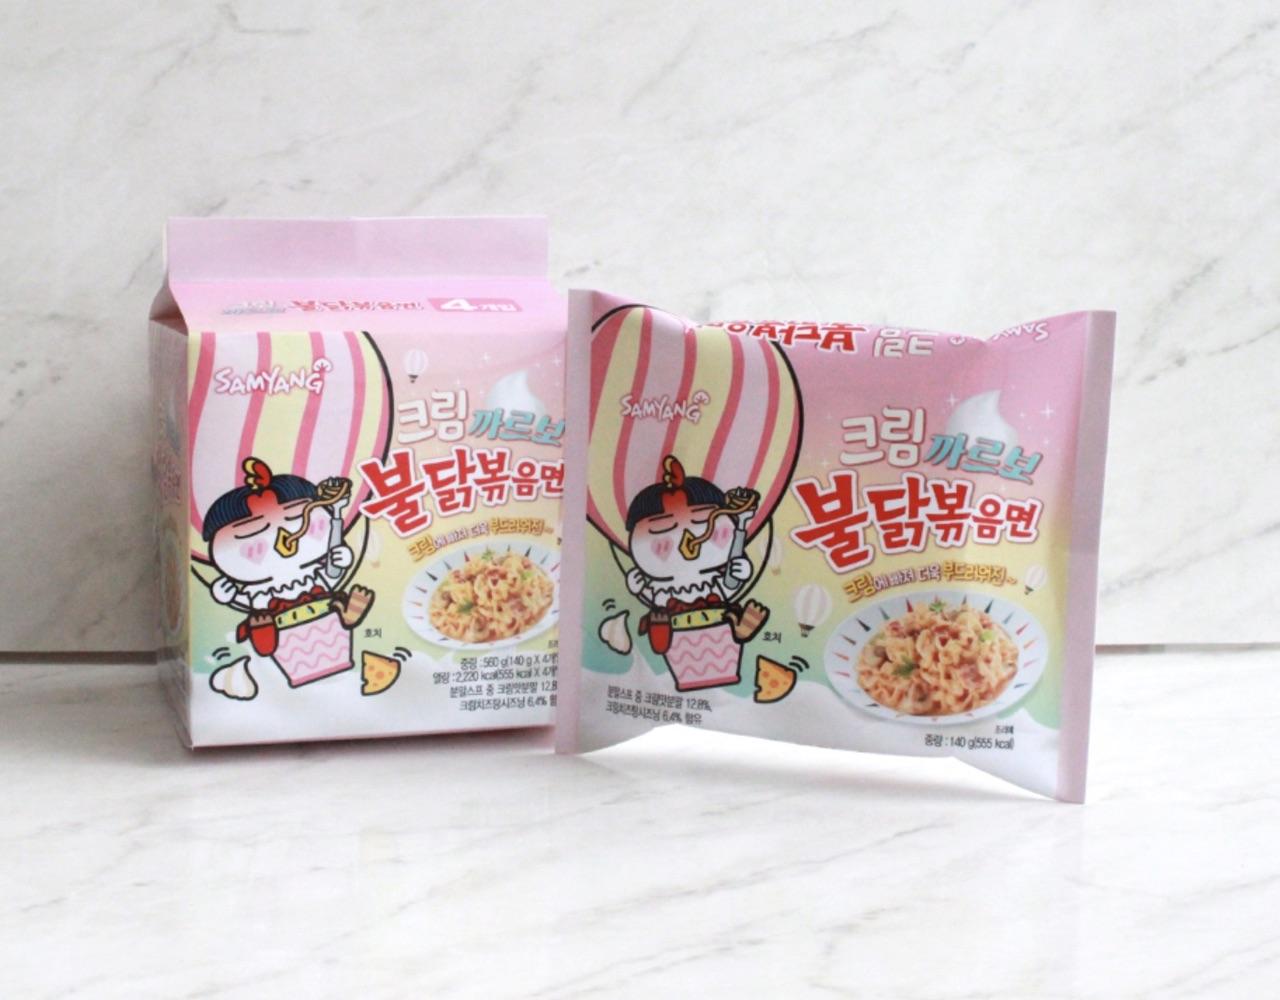 korean brand samyang buldak stirfried noodles cream carbo packaging